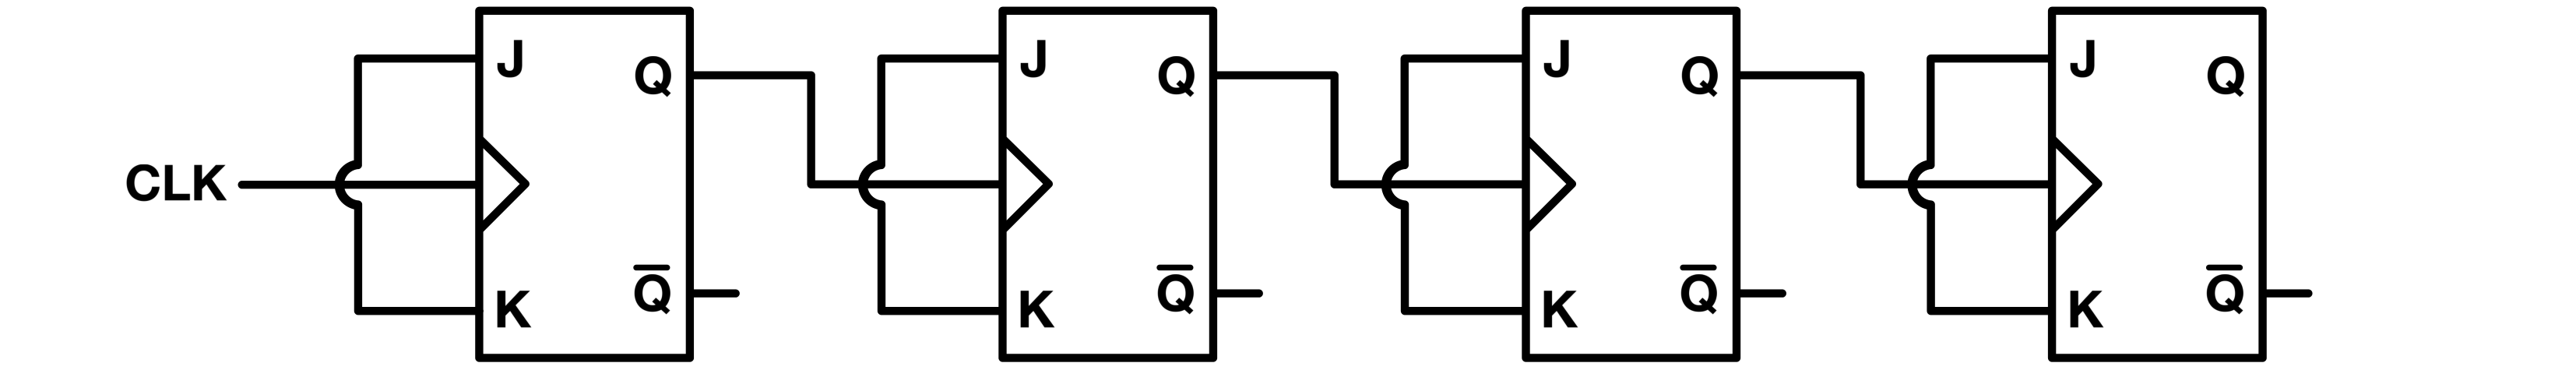 Figure 3: 4-bit Binary Counter using 4 toggled JK flip-flops